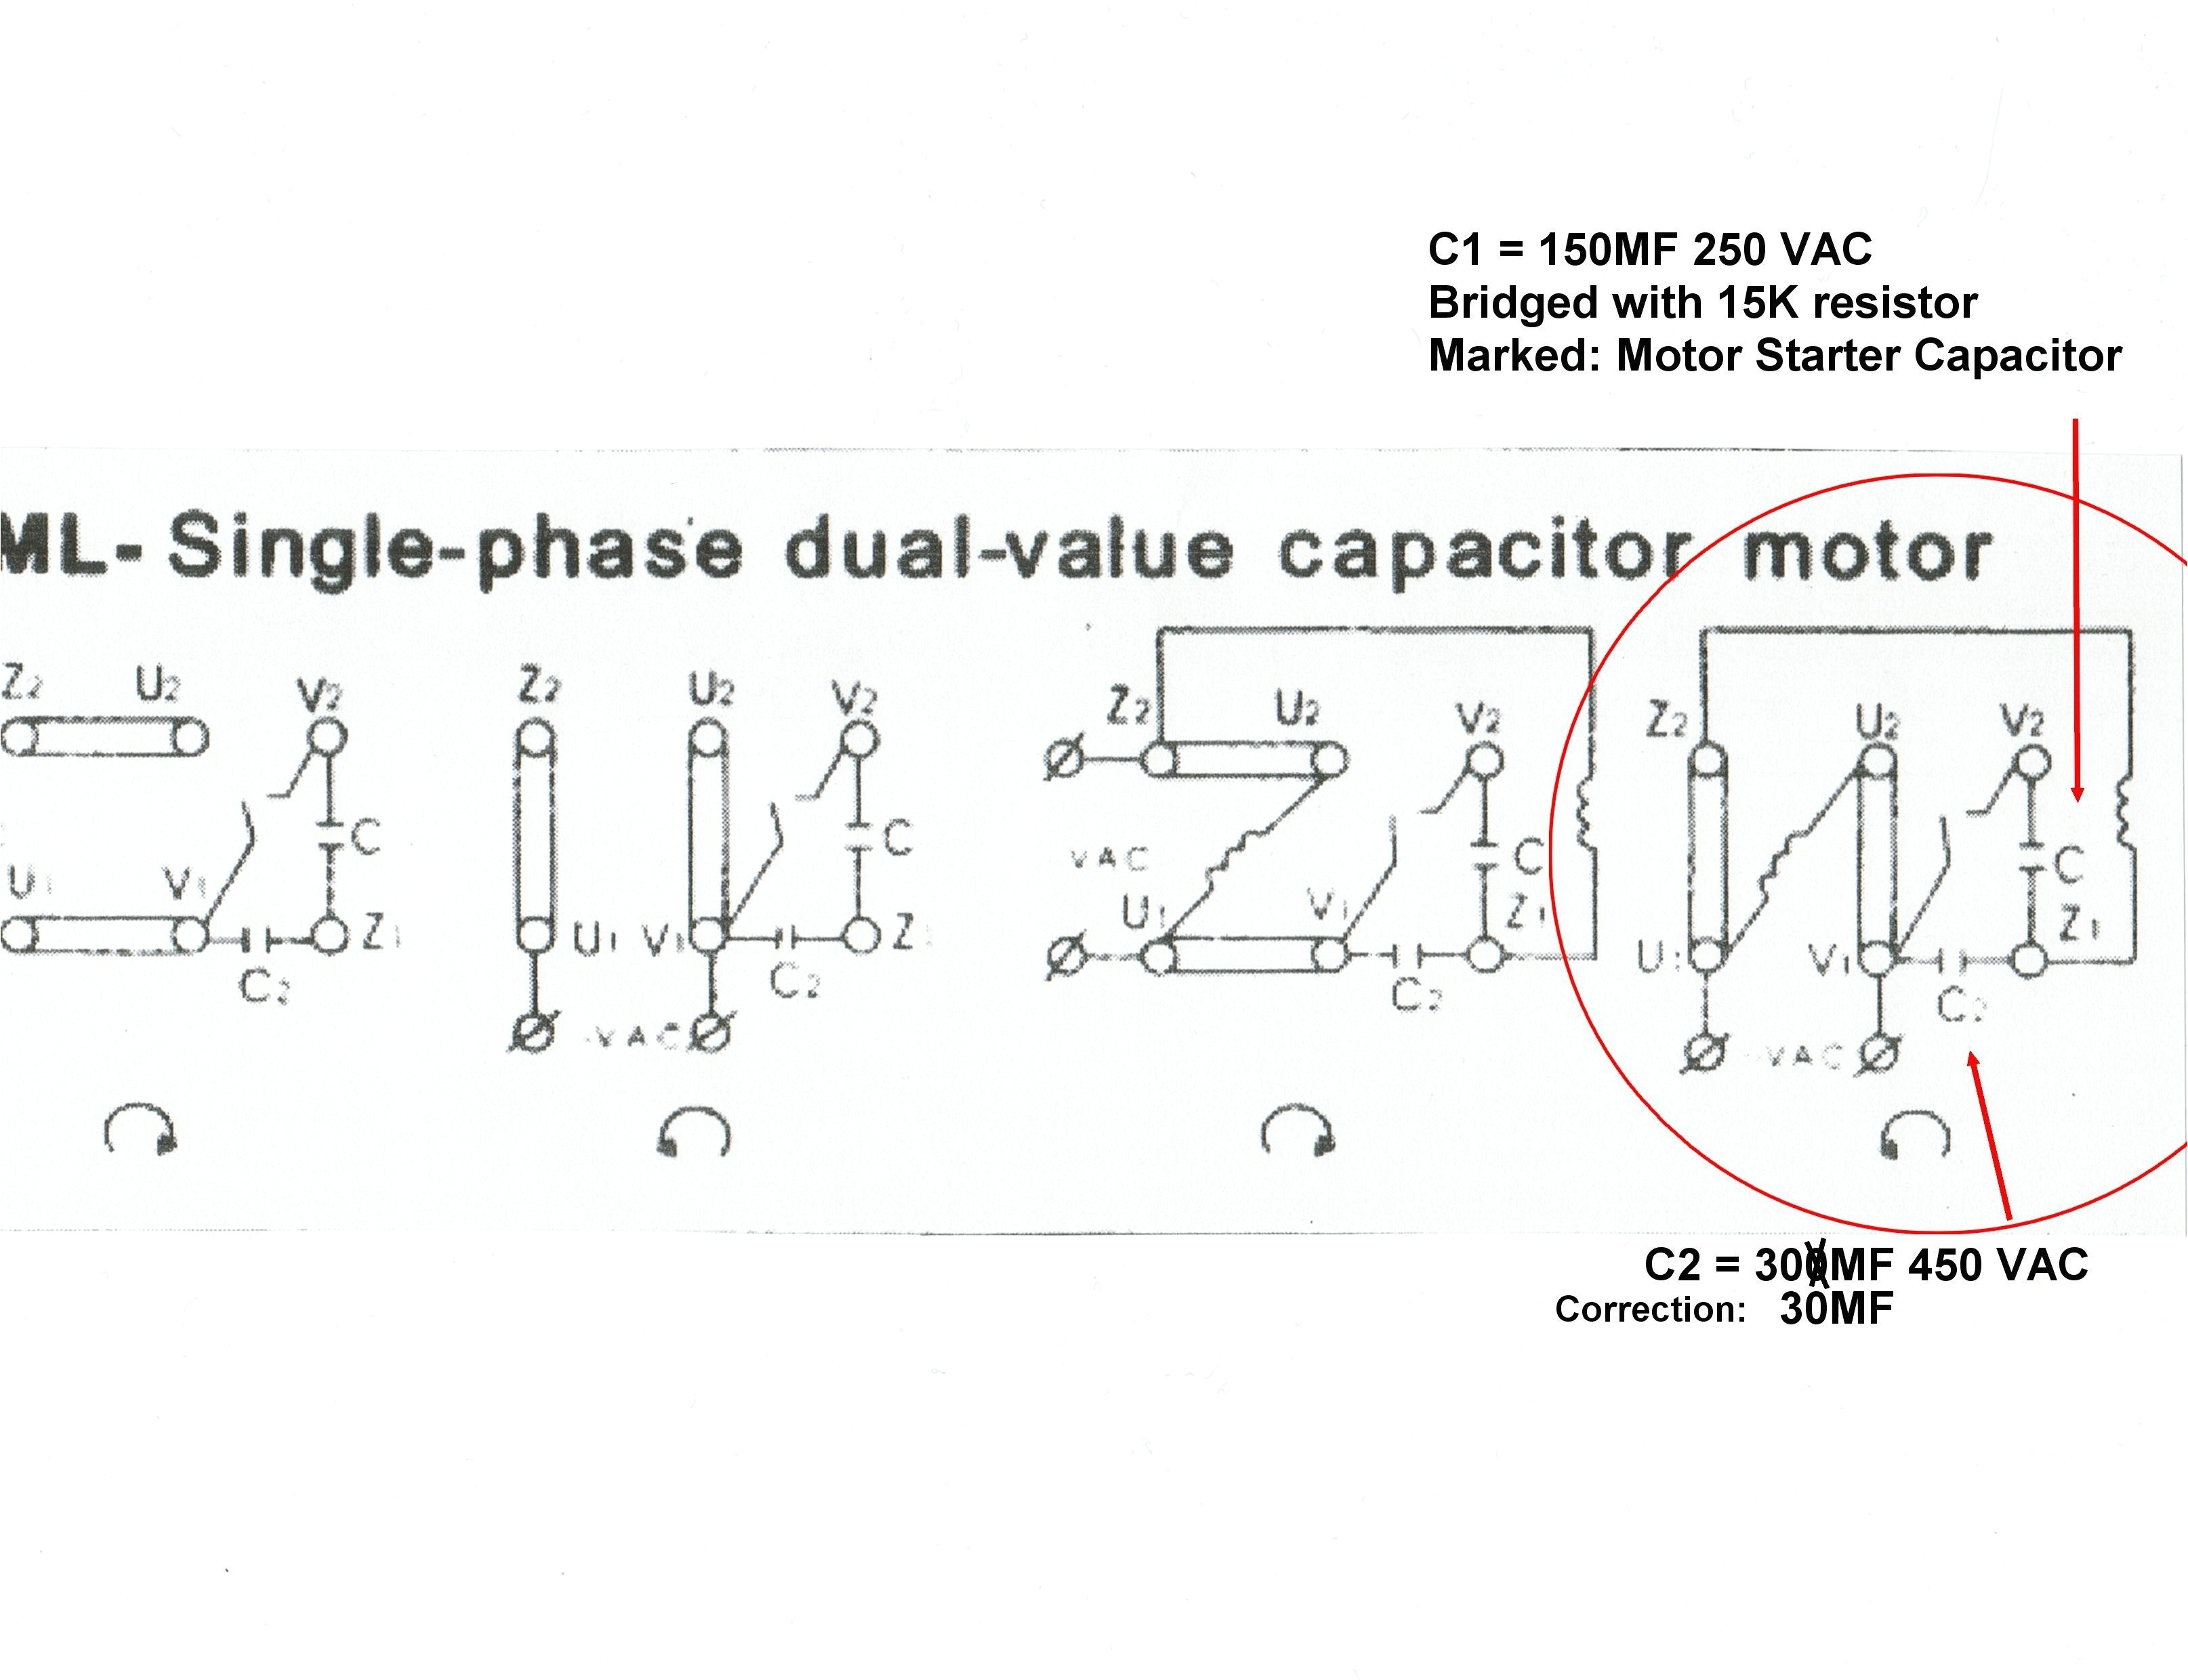 6 wire motor diagram wiring diagram datasource 6 wire dc motor diagram